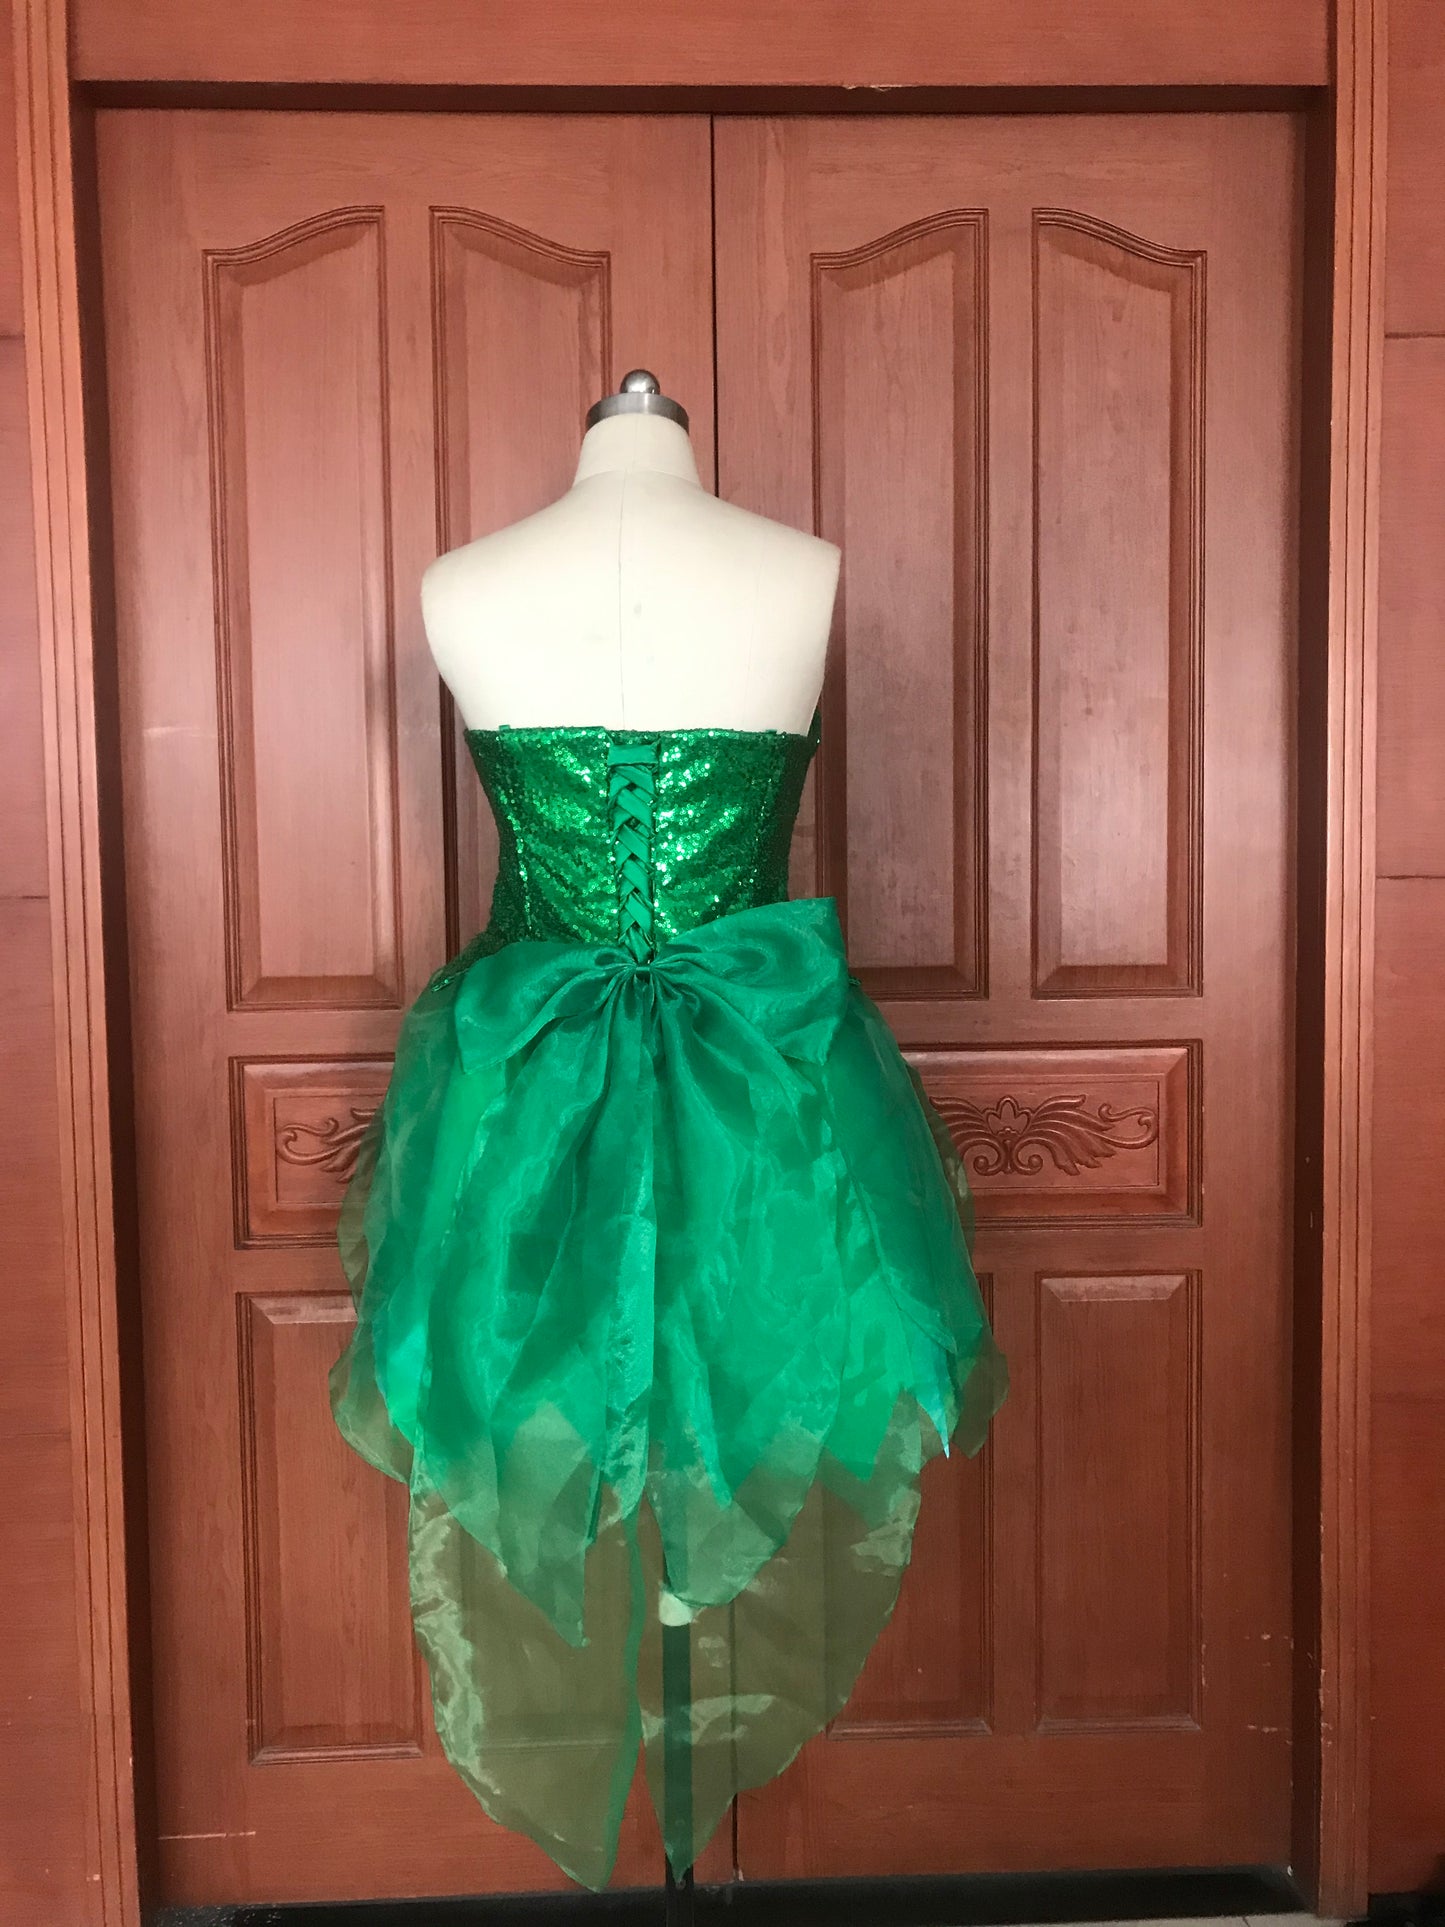 Tinker bell Princess Dress Cosplay Costumes